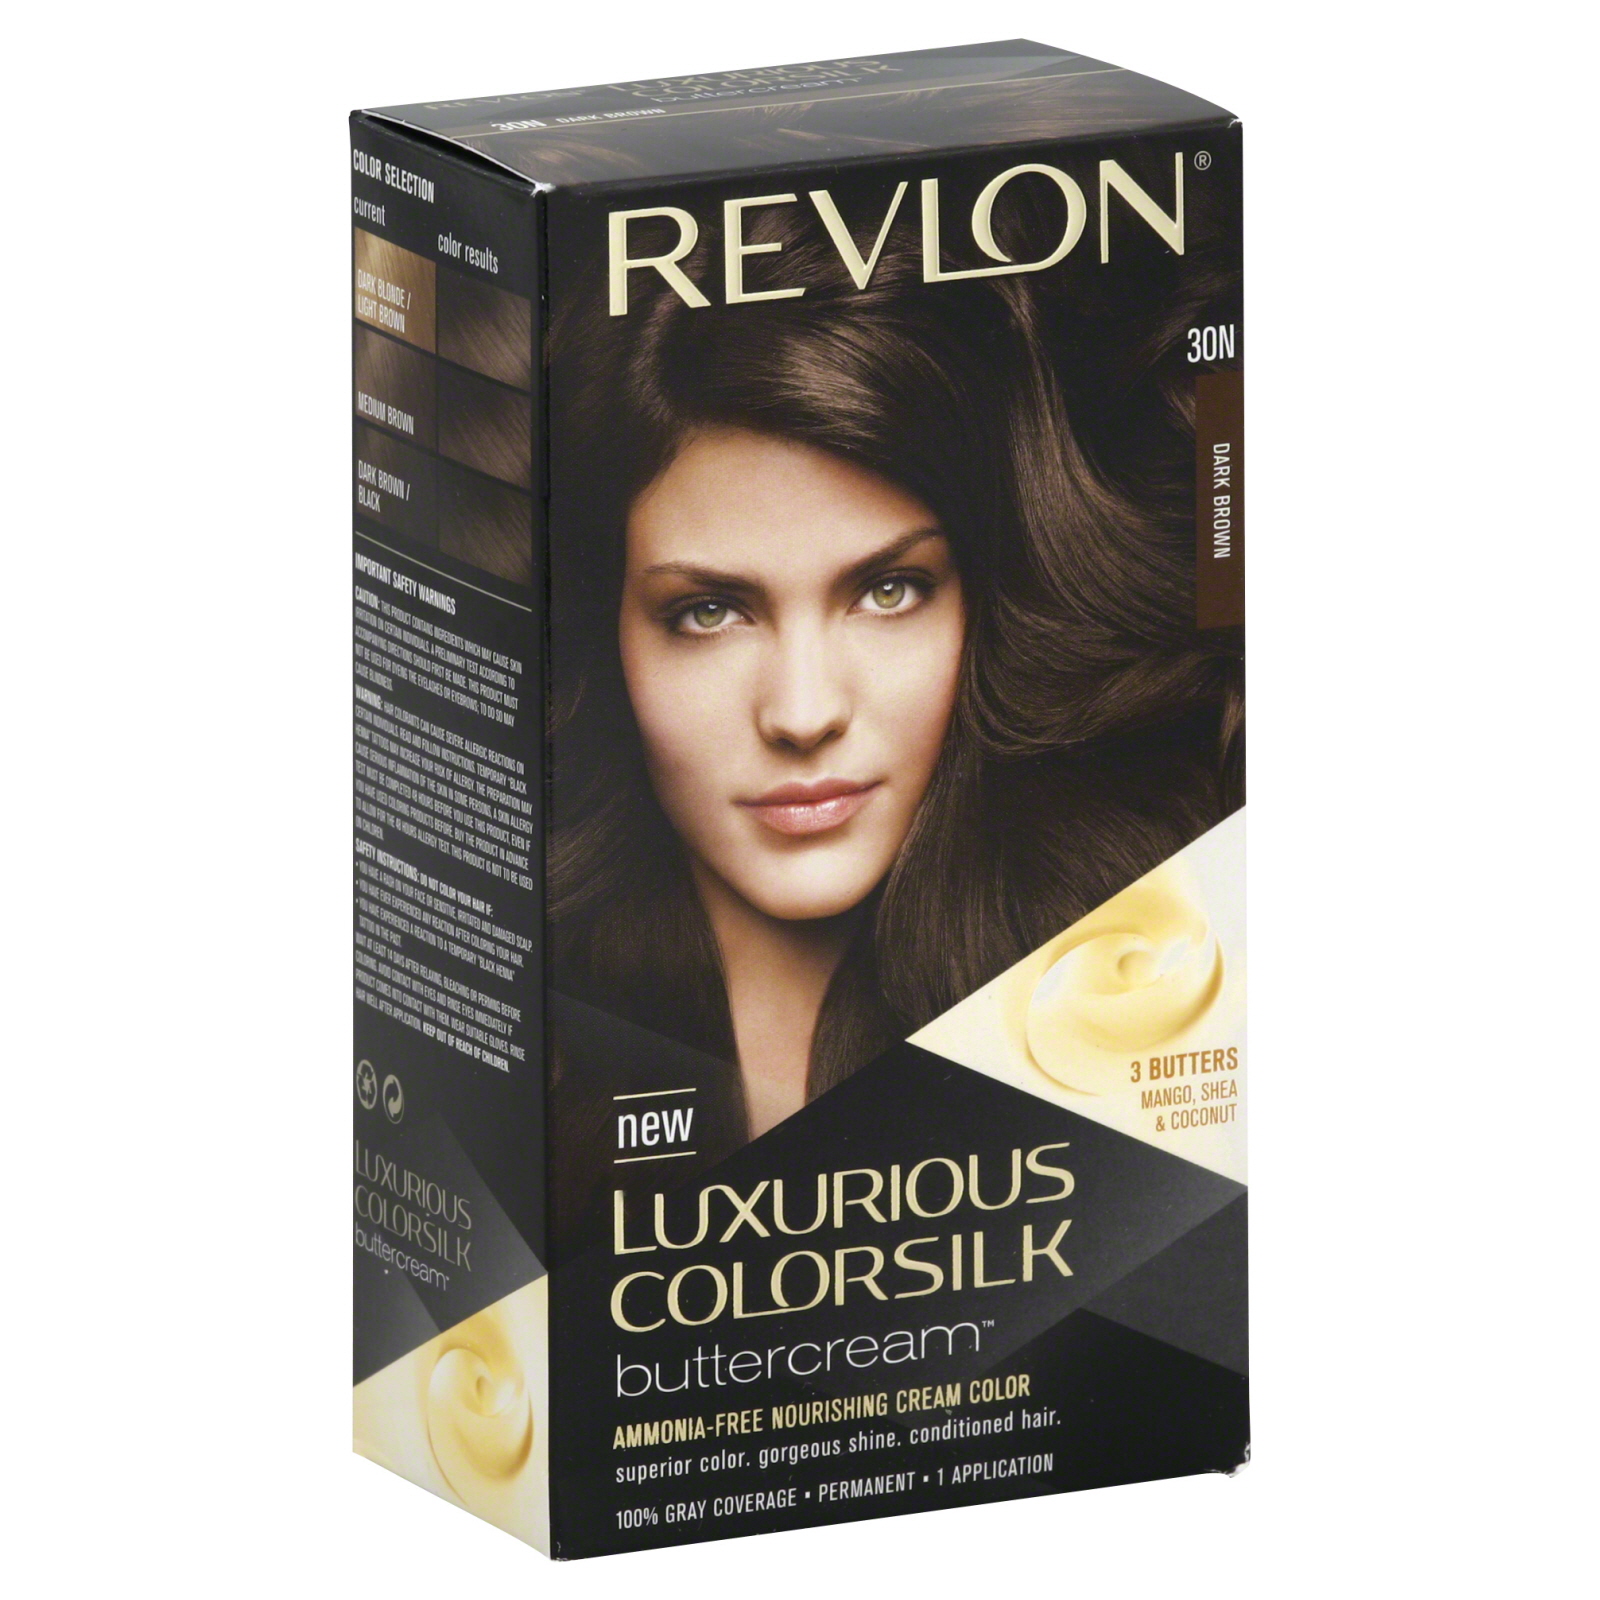 Revlon Luxurious Colorsilk Buttercream Permanent Color, Dark Brown